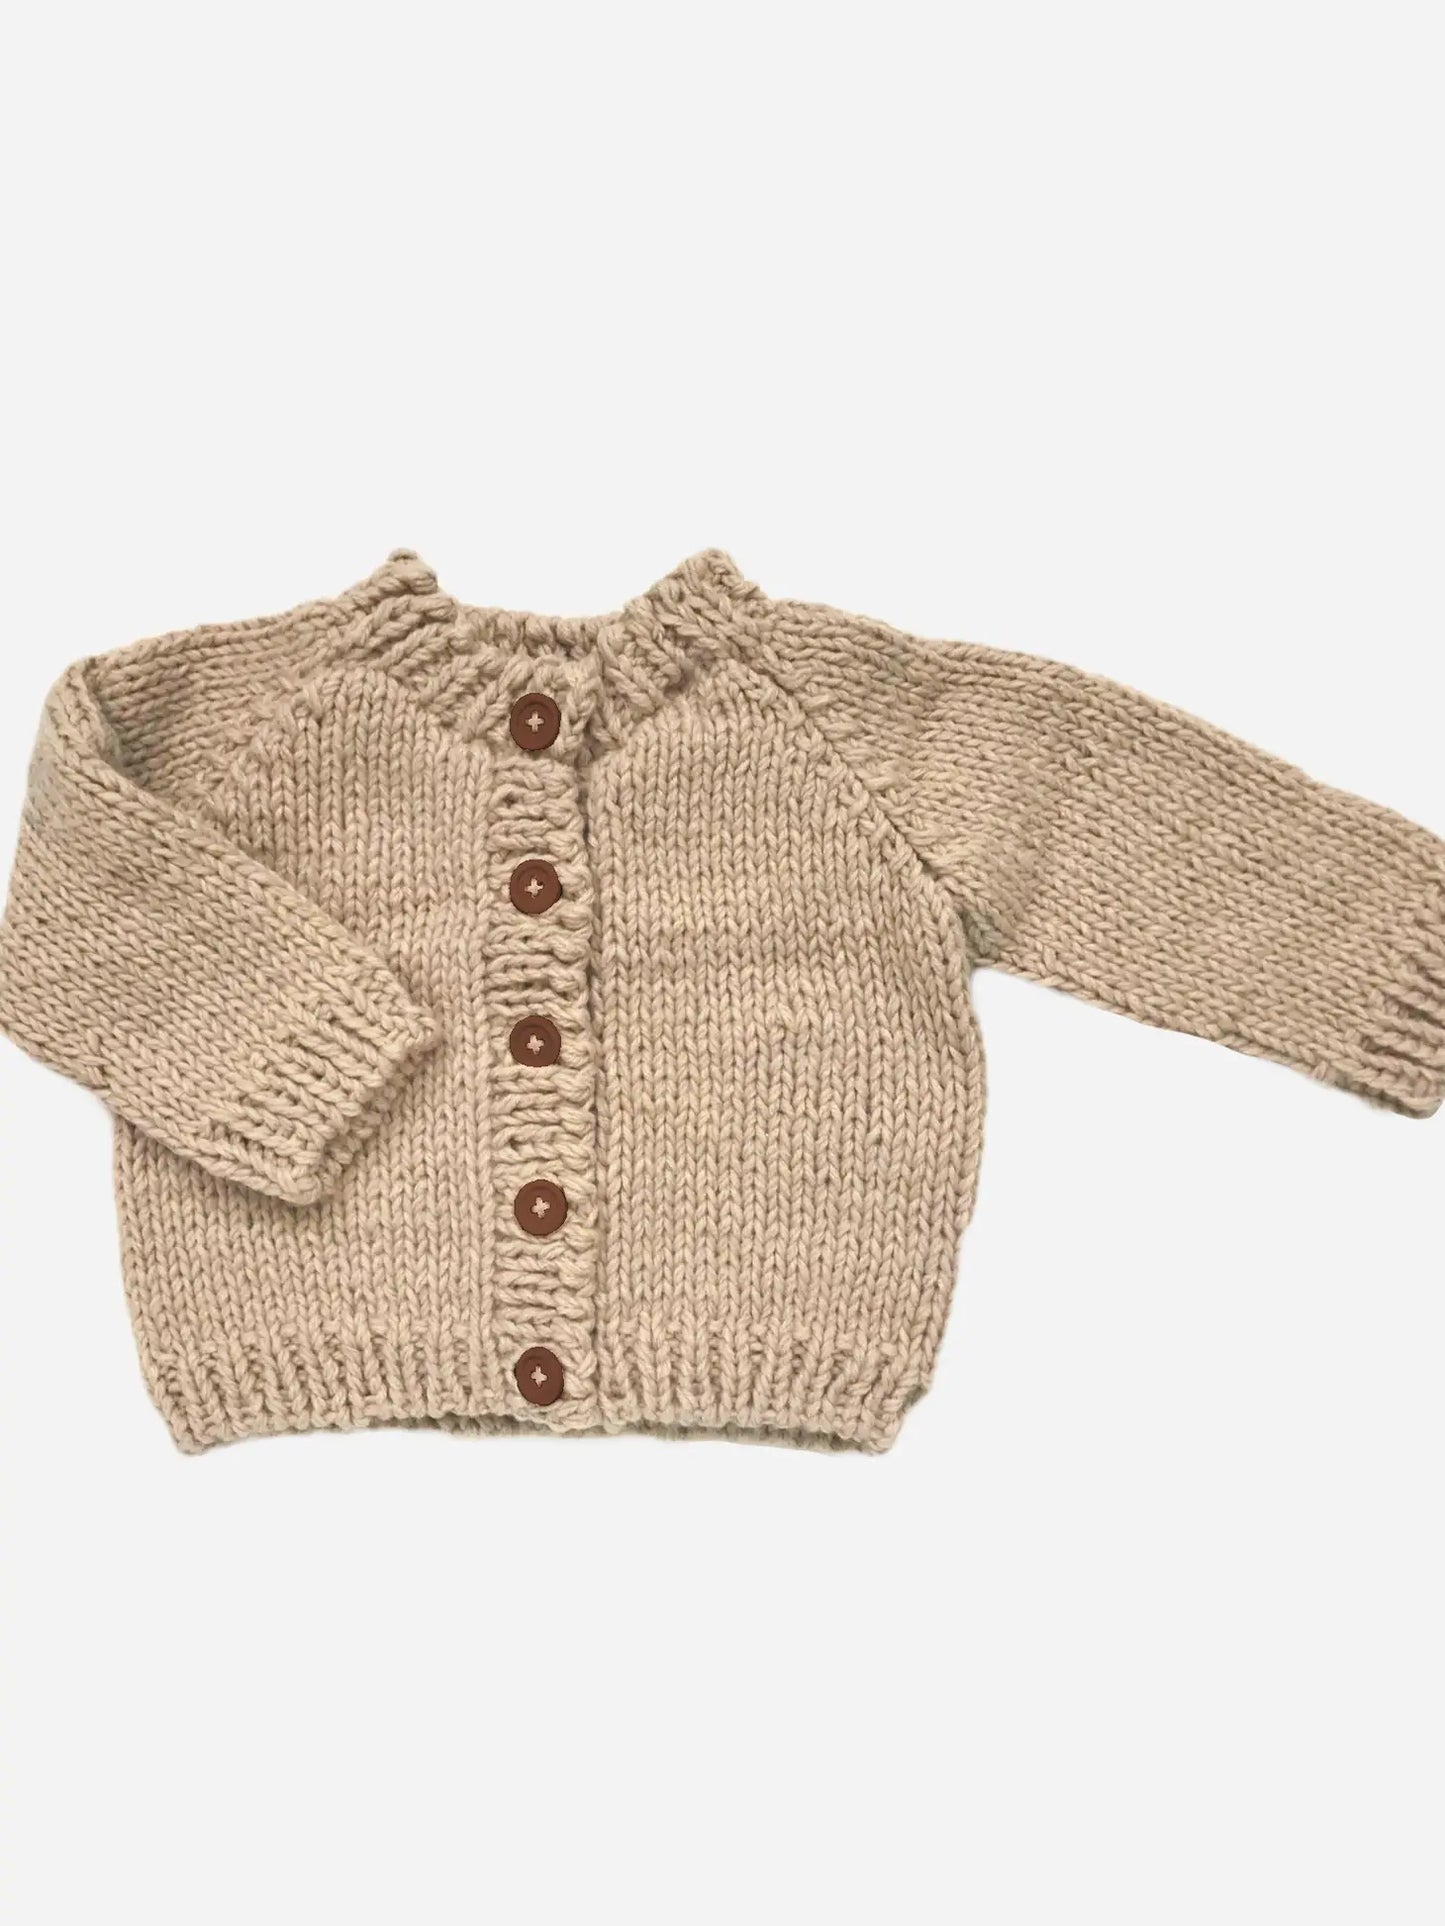 Classic Cardigan | Acrylic Hand Knit Kids Sweater